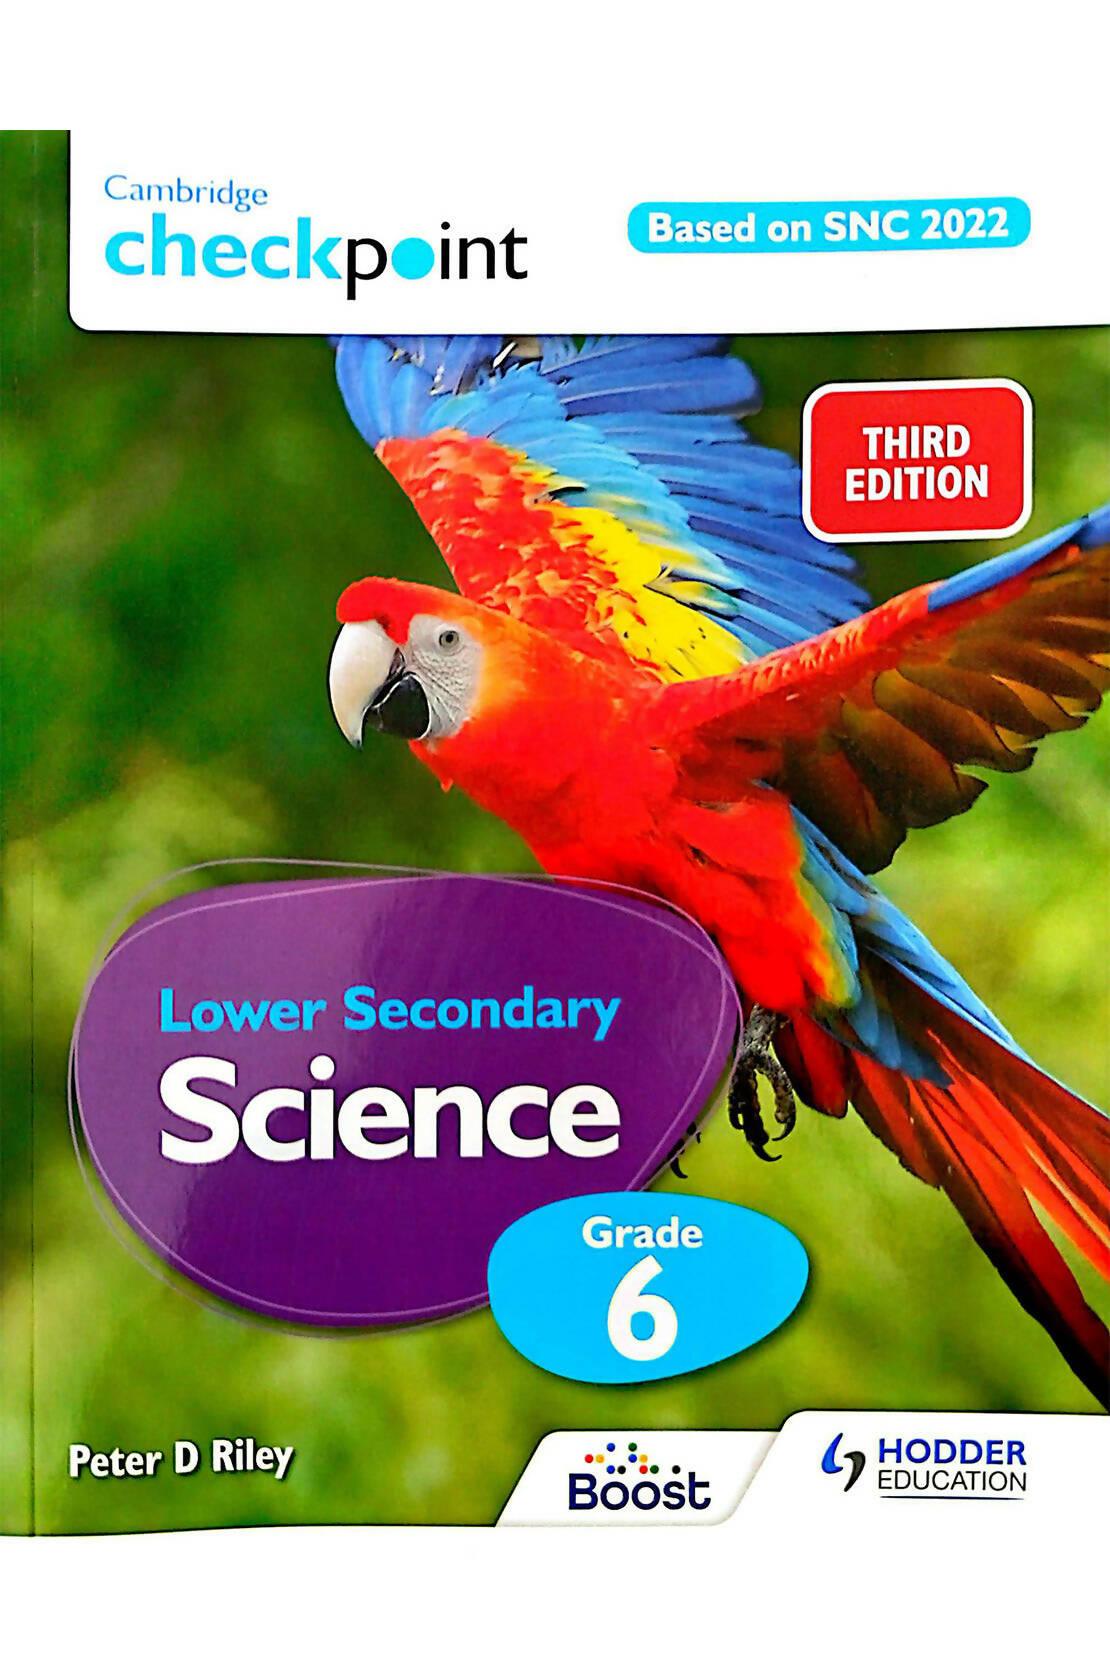 Cambridge Checkpoint Lower Secondary Science Textbook 6 (SNC Aligned, Pakistan Edition - Hodder Cambridge) - ValueBox